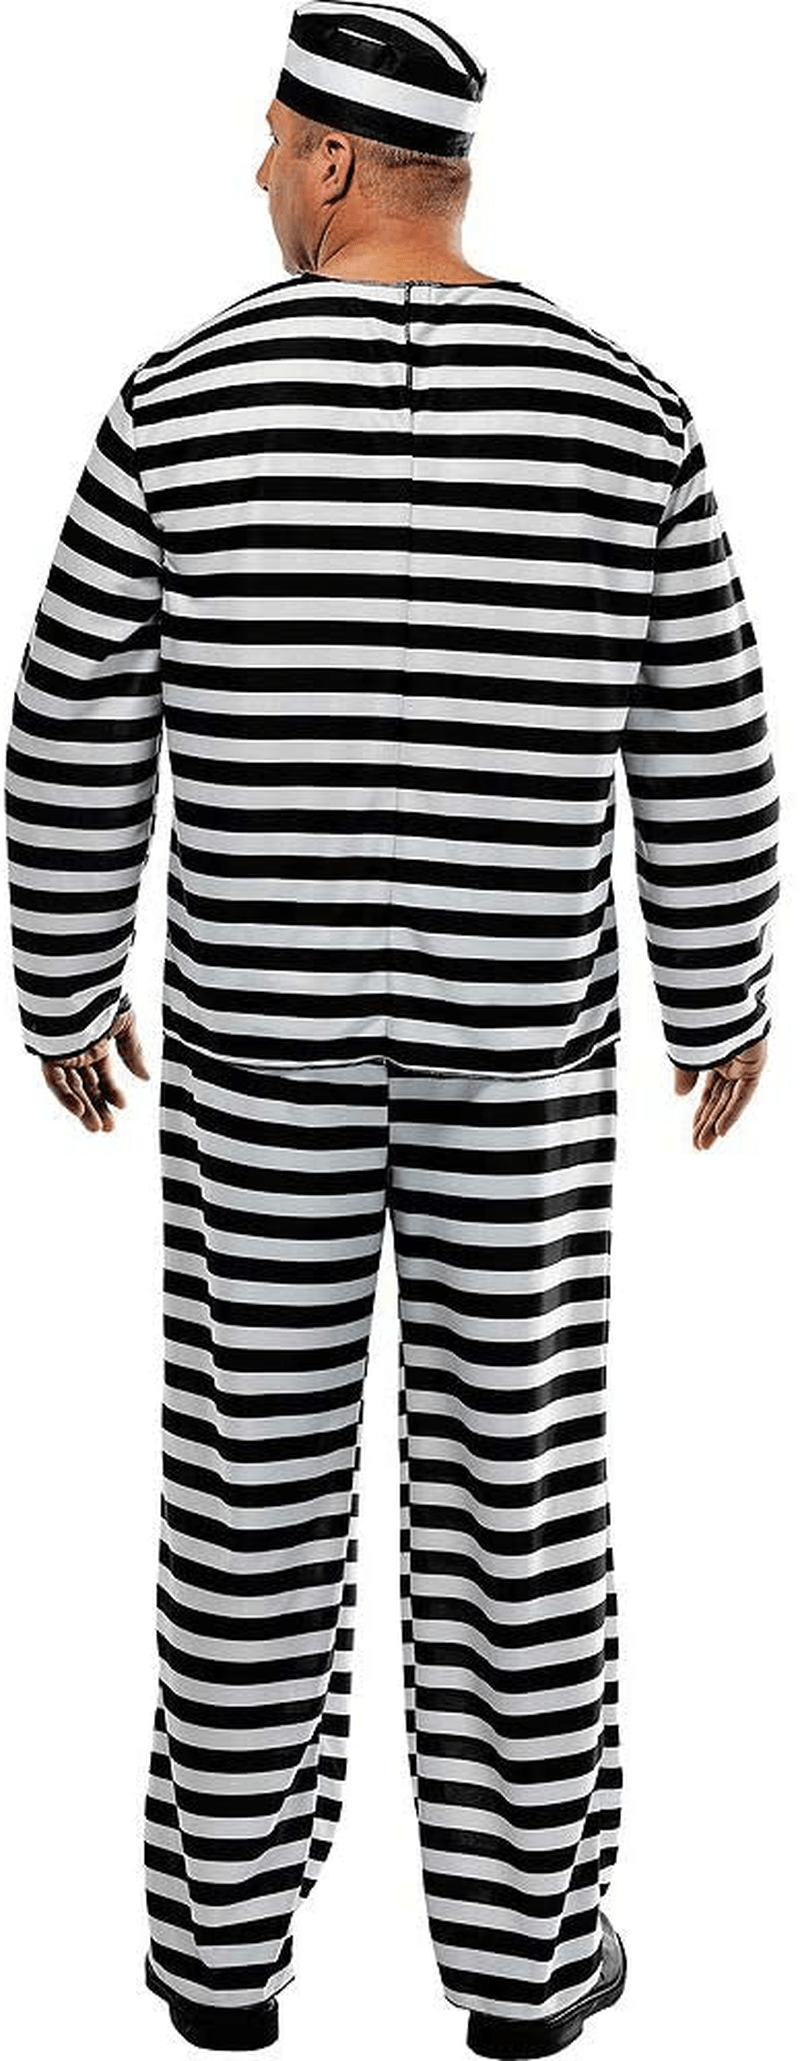 Amscan 840228 Men Jail Prisoner Costume Set - Plus Size, Black/White Apparel & Accessories > Costumes & Accessories > Costumes amscan   